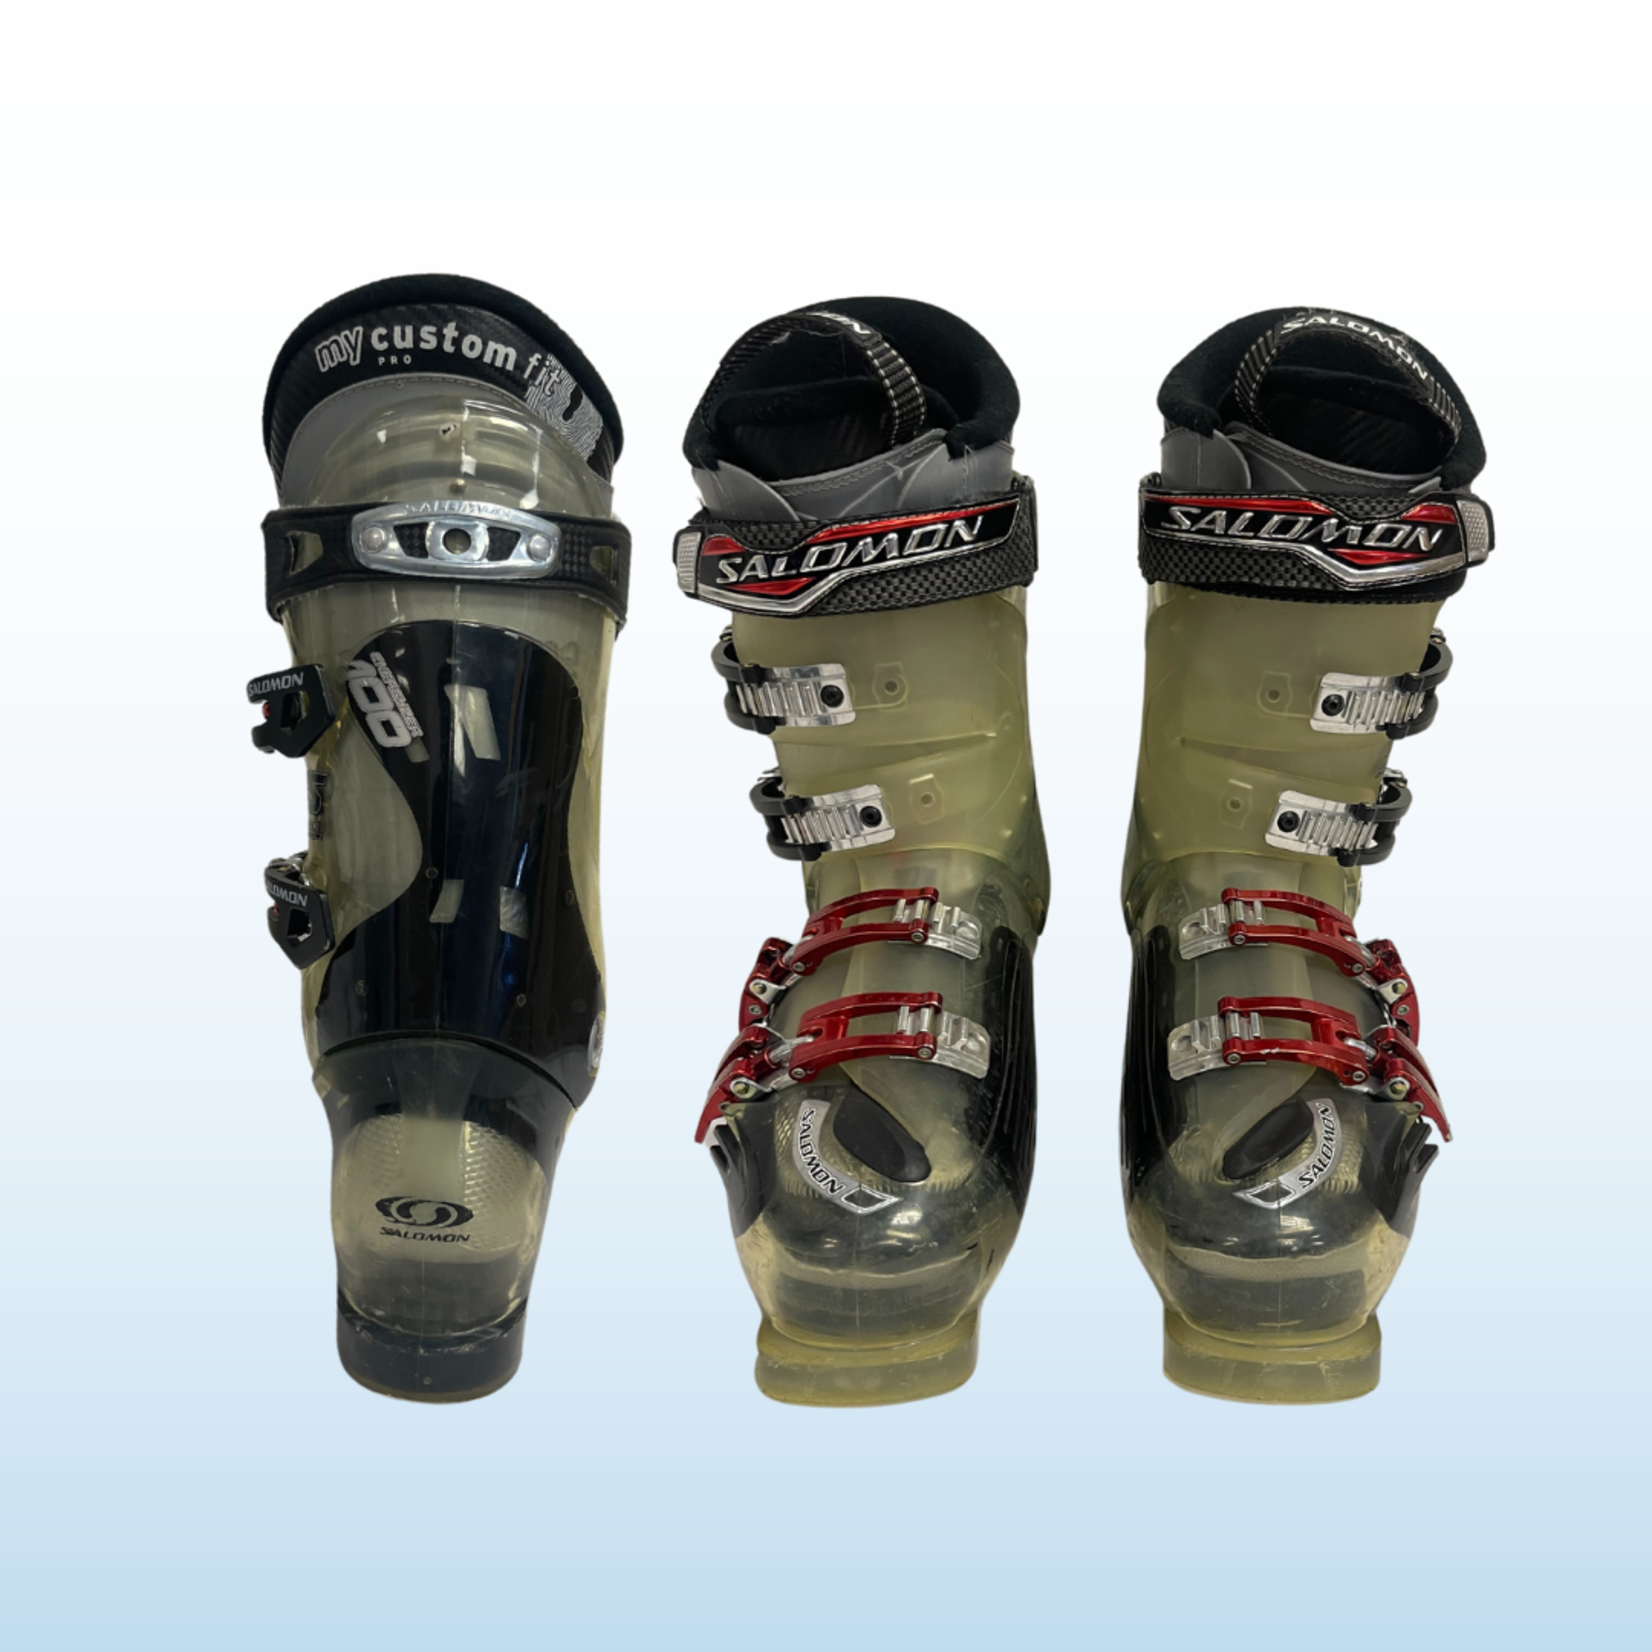 Salomon Salomon X3-CS Custom Shell Ski Boots Size 28/28.5